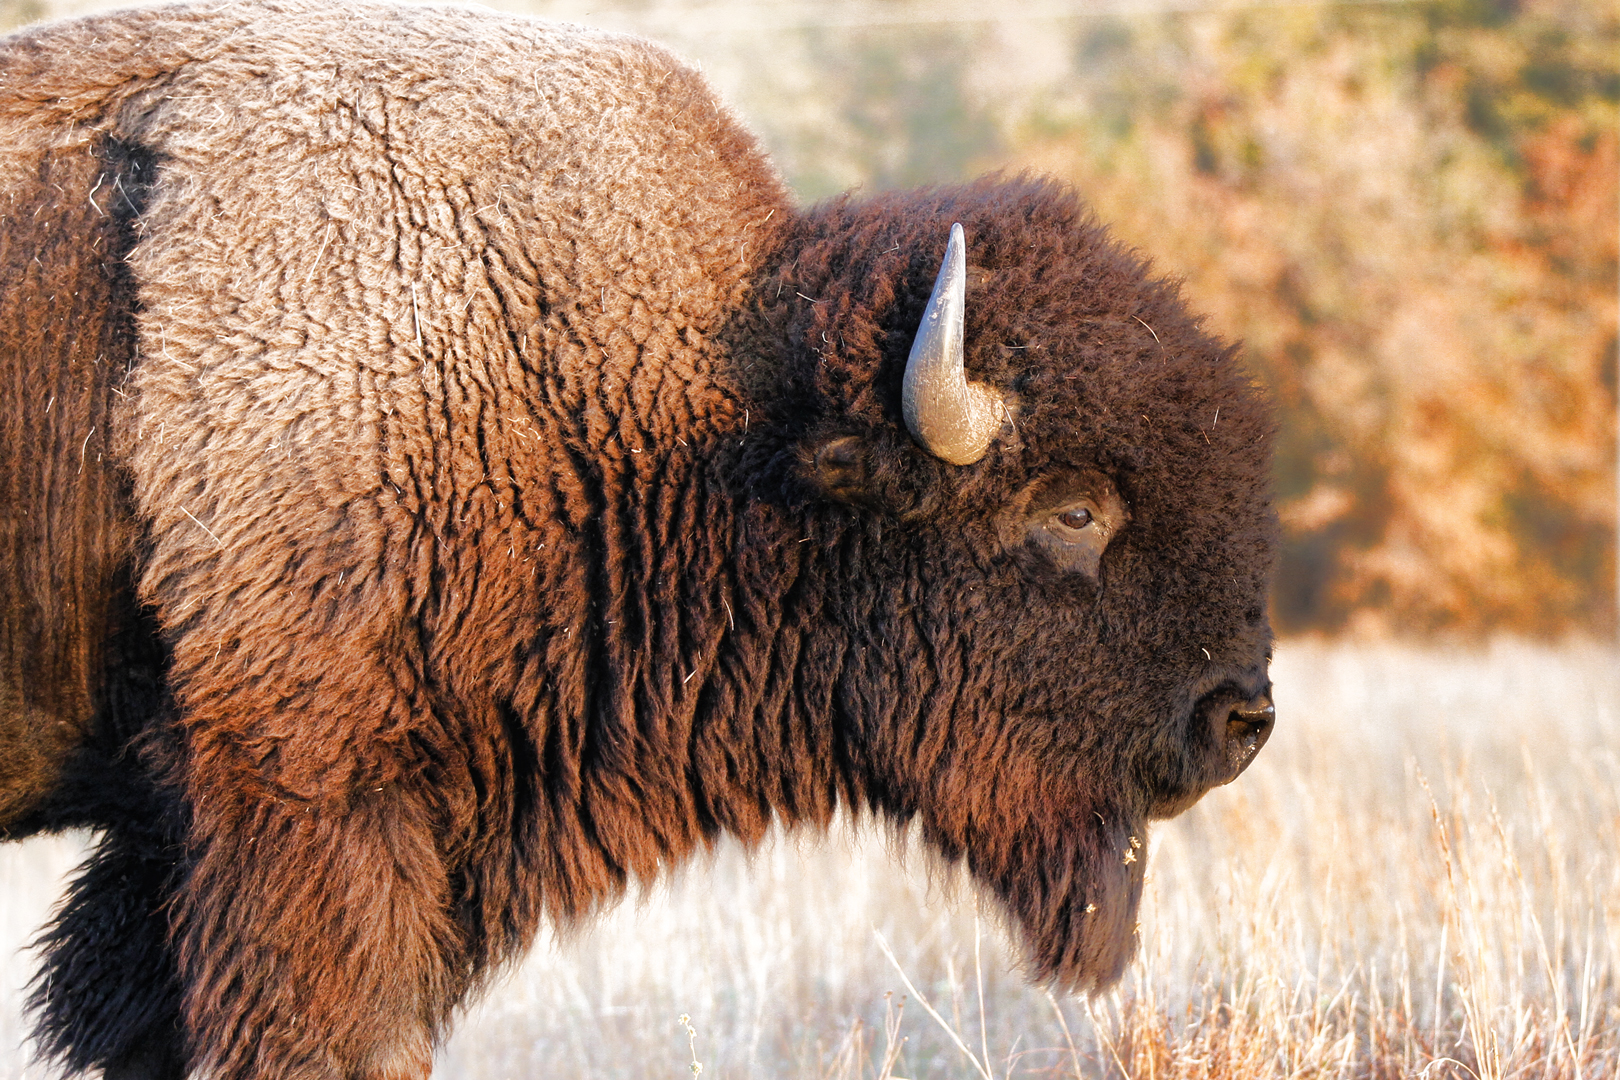 American Bison. Wichita Mountains Wildlife Refuge SW Oklahoma. Photo credit: Larry Smith / Flickr